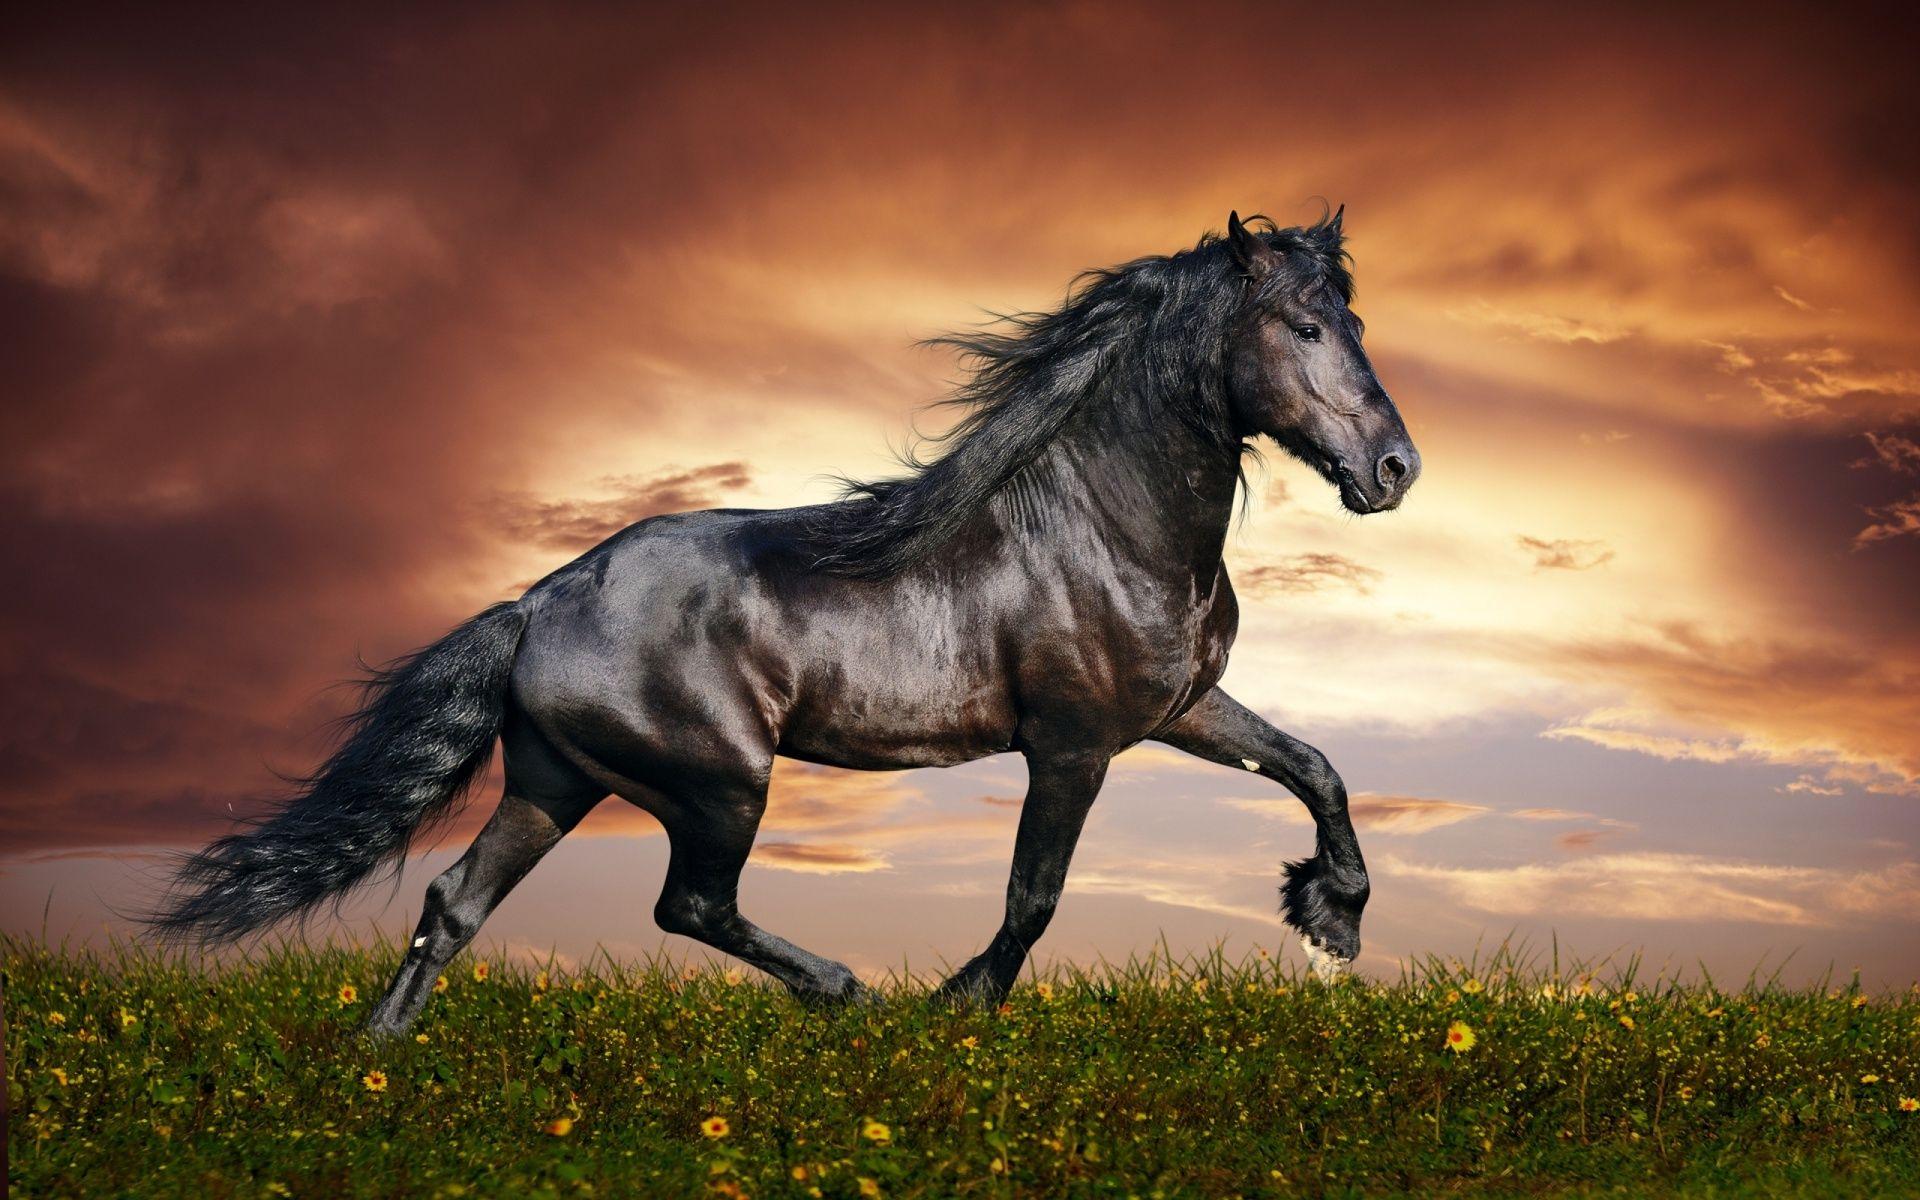 Dark Black Arabian Horse Wallpaper. Horses. Horse wallpaper, Horse